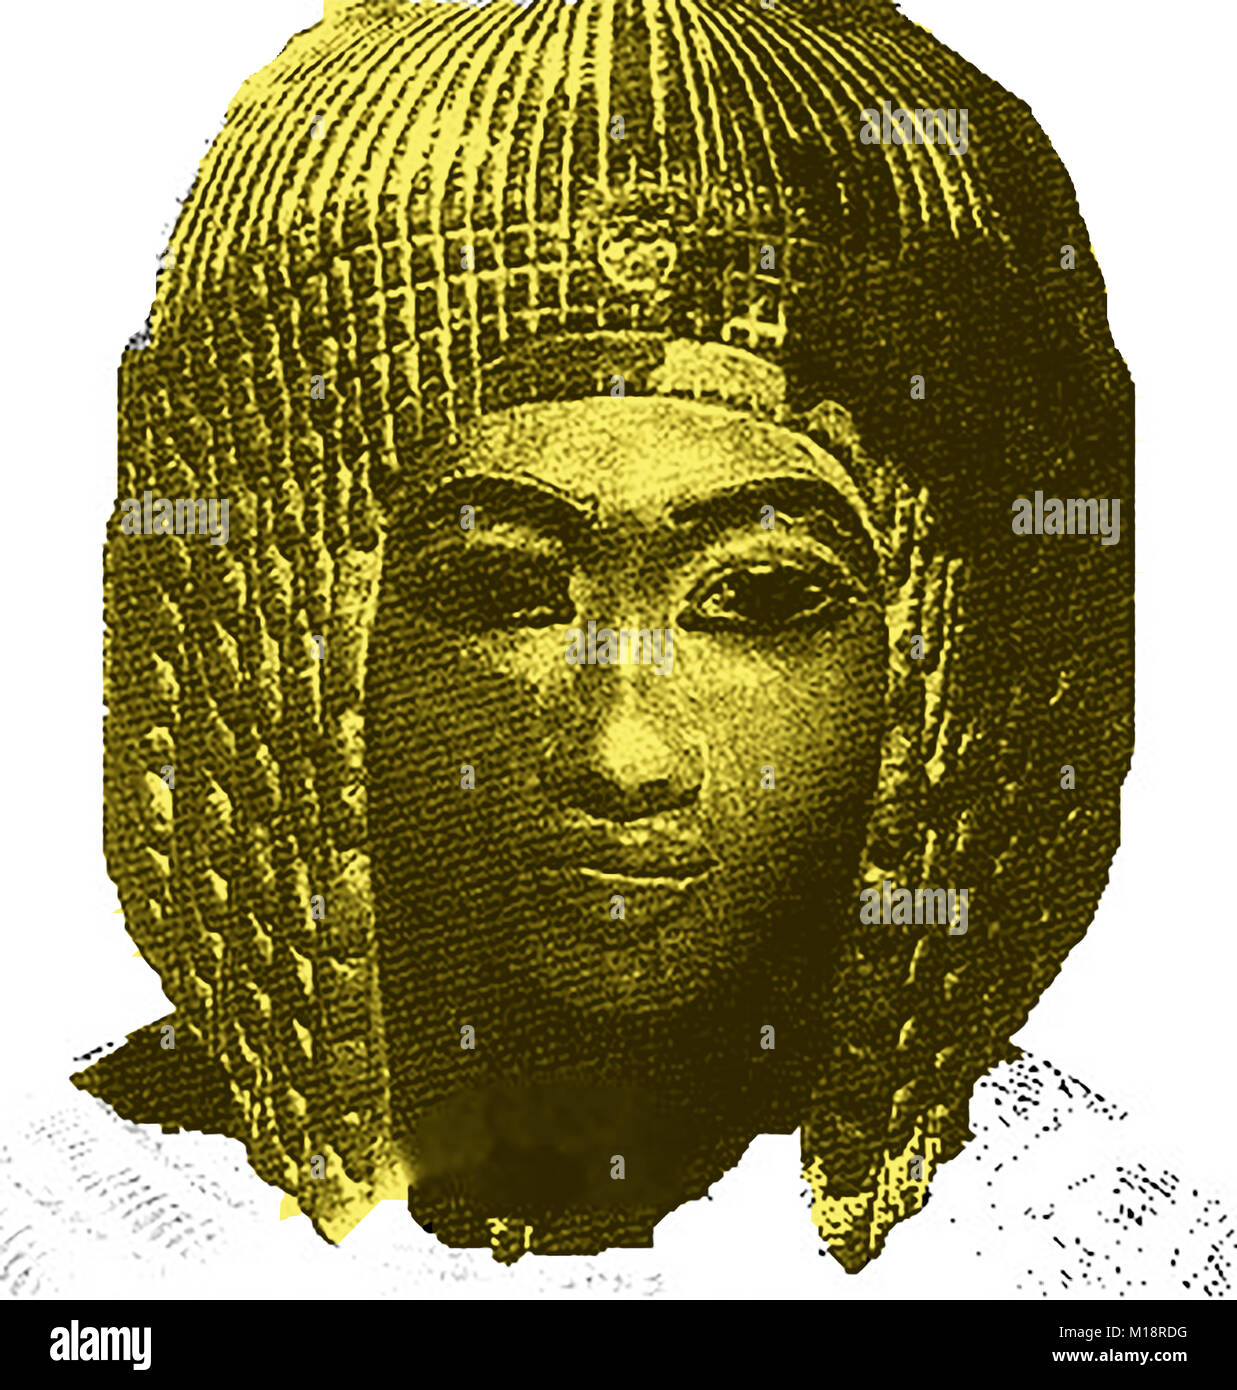 Ägyptologie, Magie und Mystik - MERY AMON Amarna, (II) die vermeintliche "Königin des Ägyptischen Pharao AKENATEN verloren Stockfoto